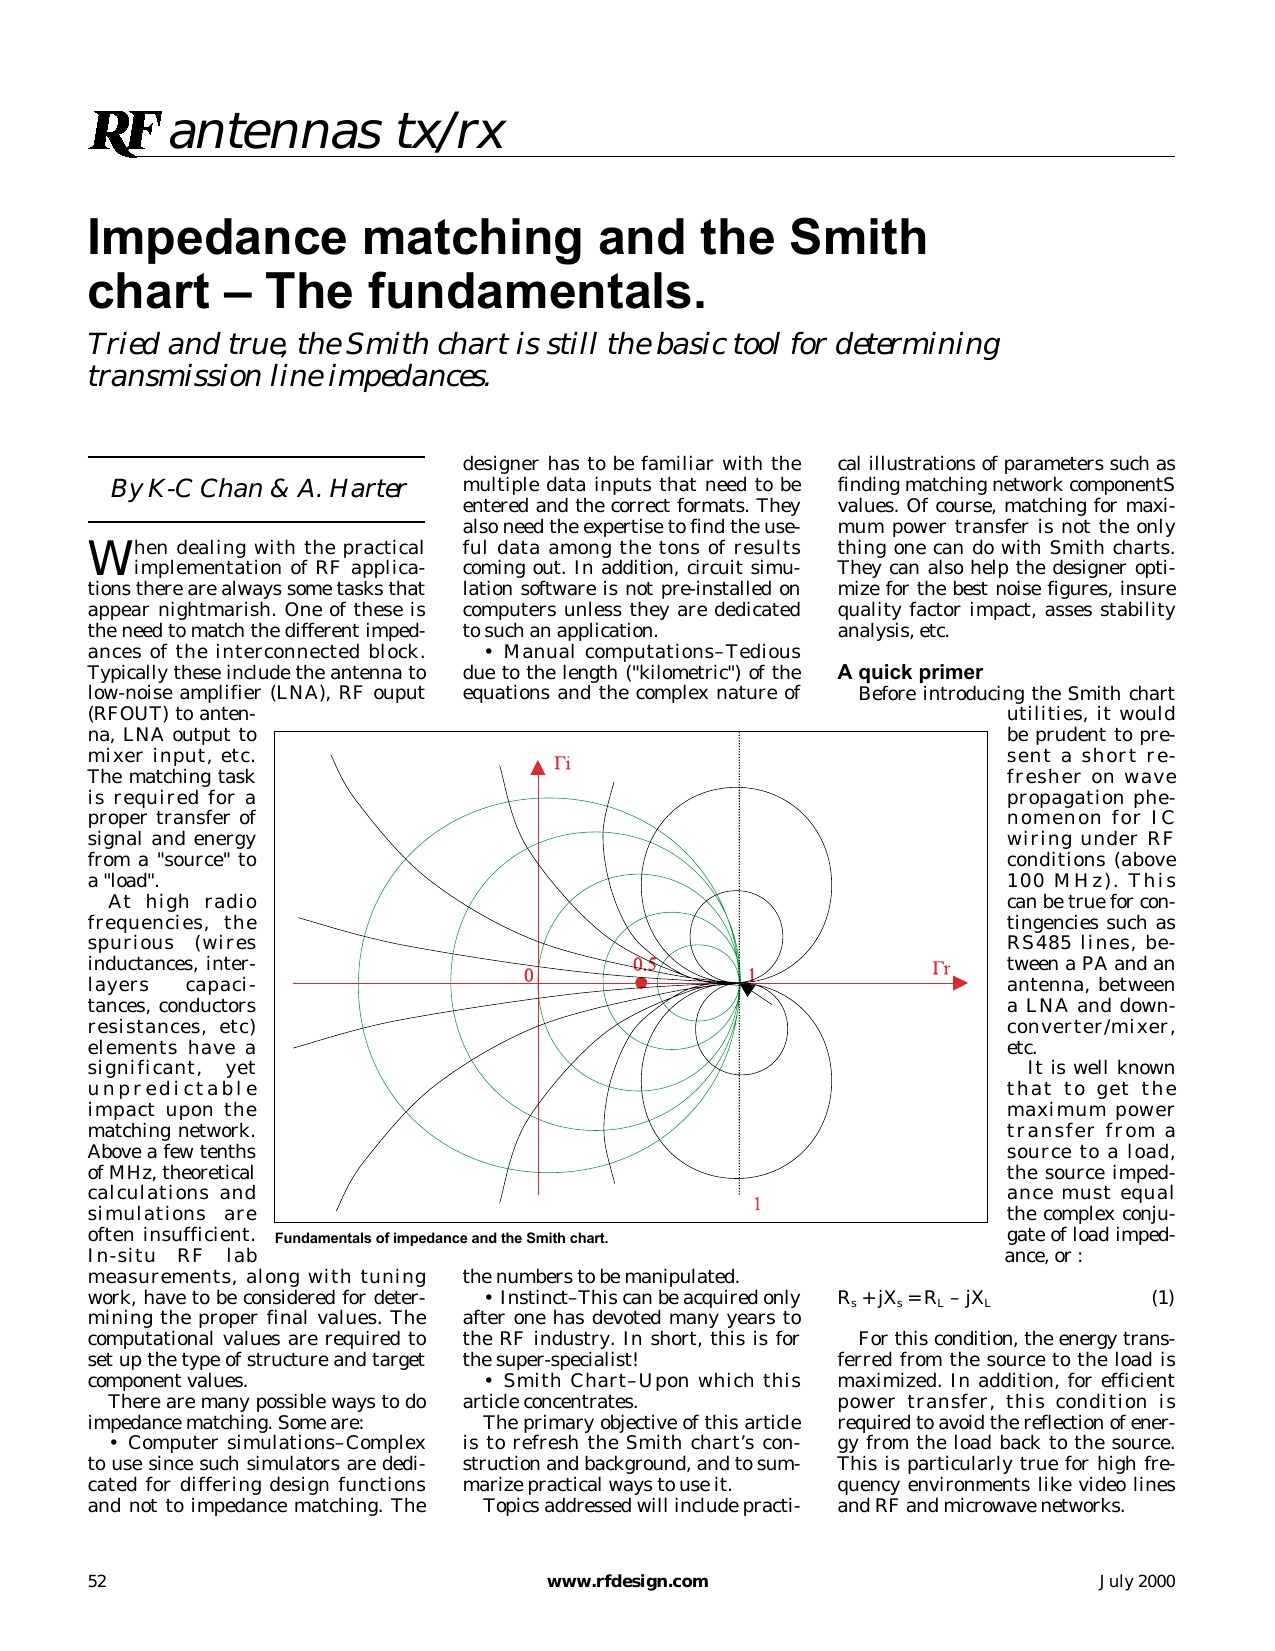 Smith Chart Fundamentals